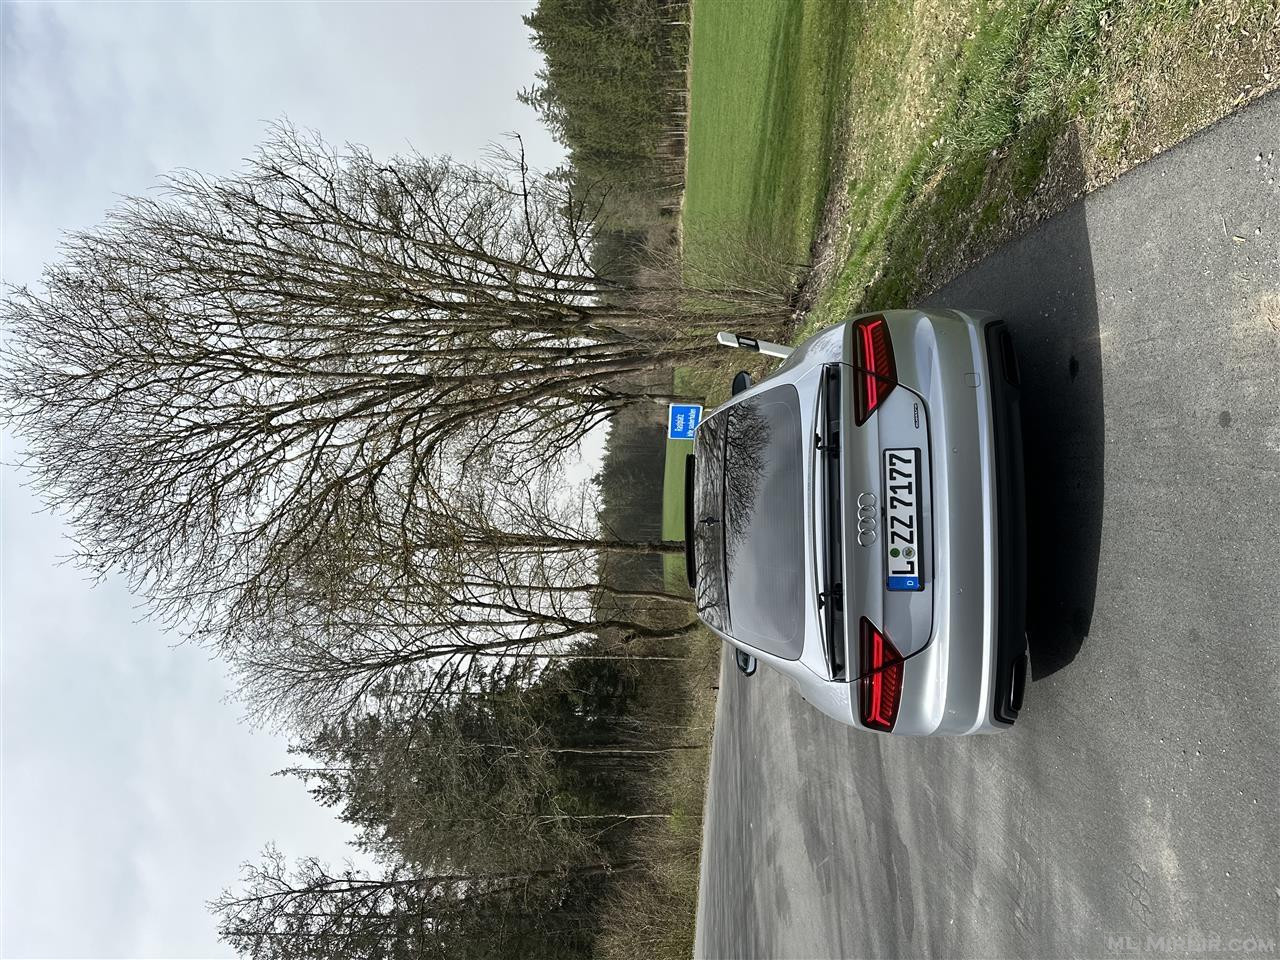 Audi A7 Sportback 